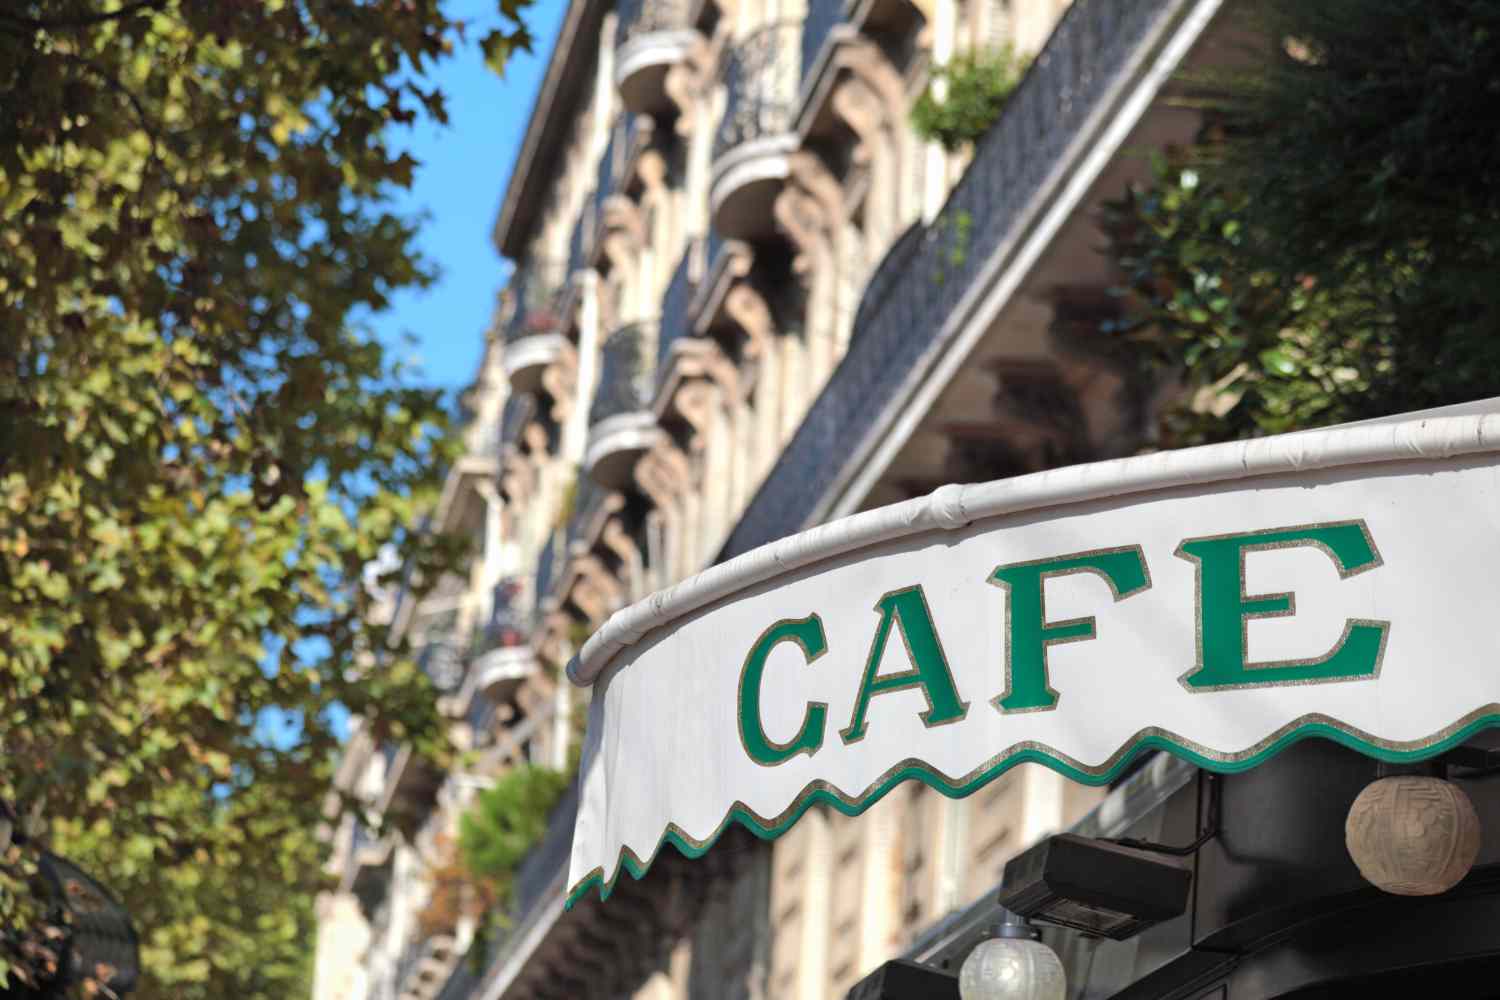 cafes in Paris offering vegan food